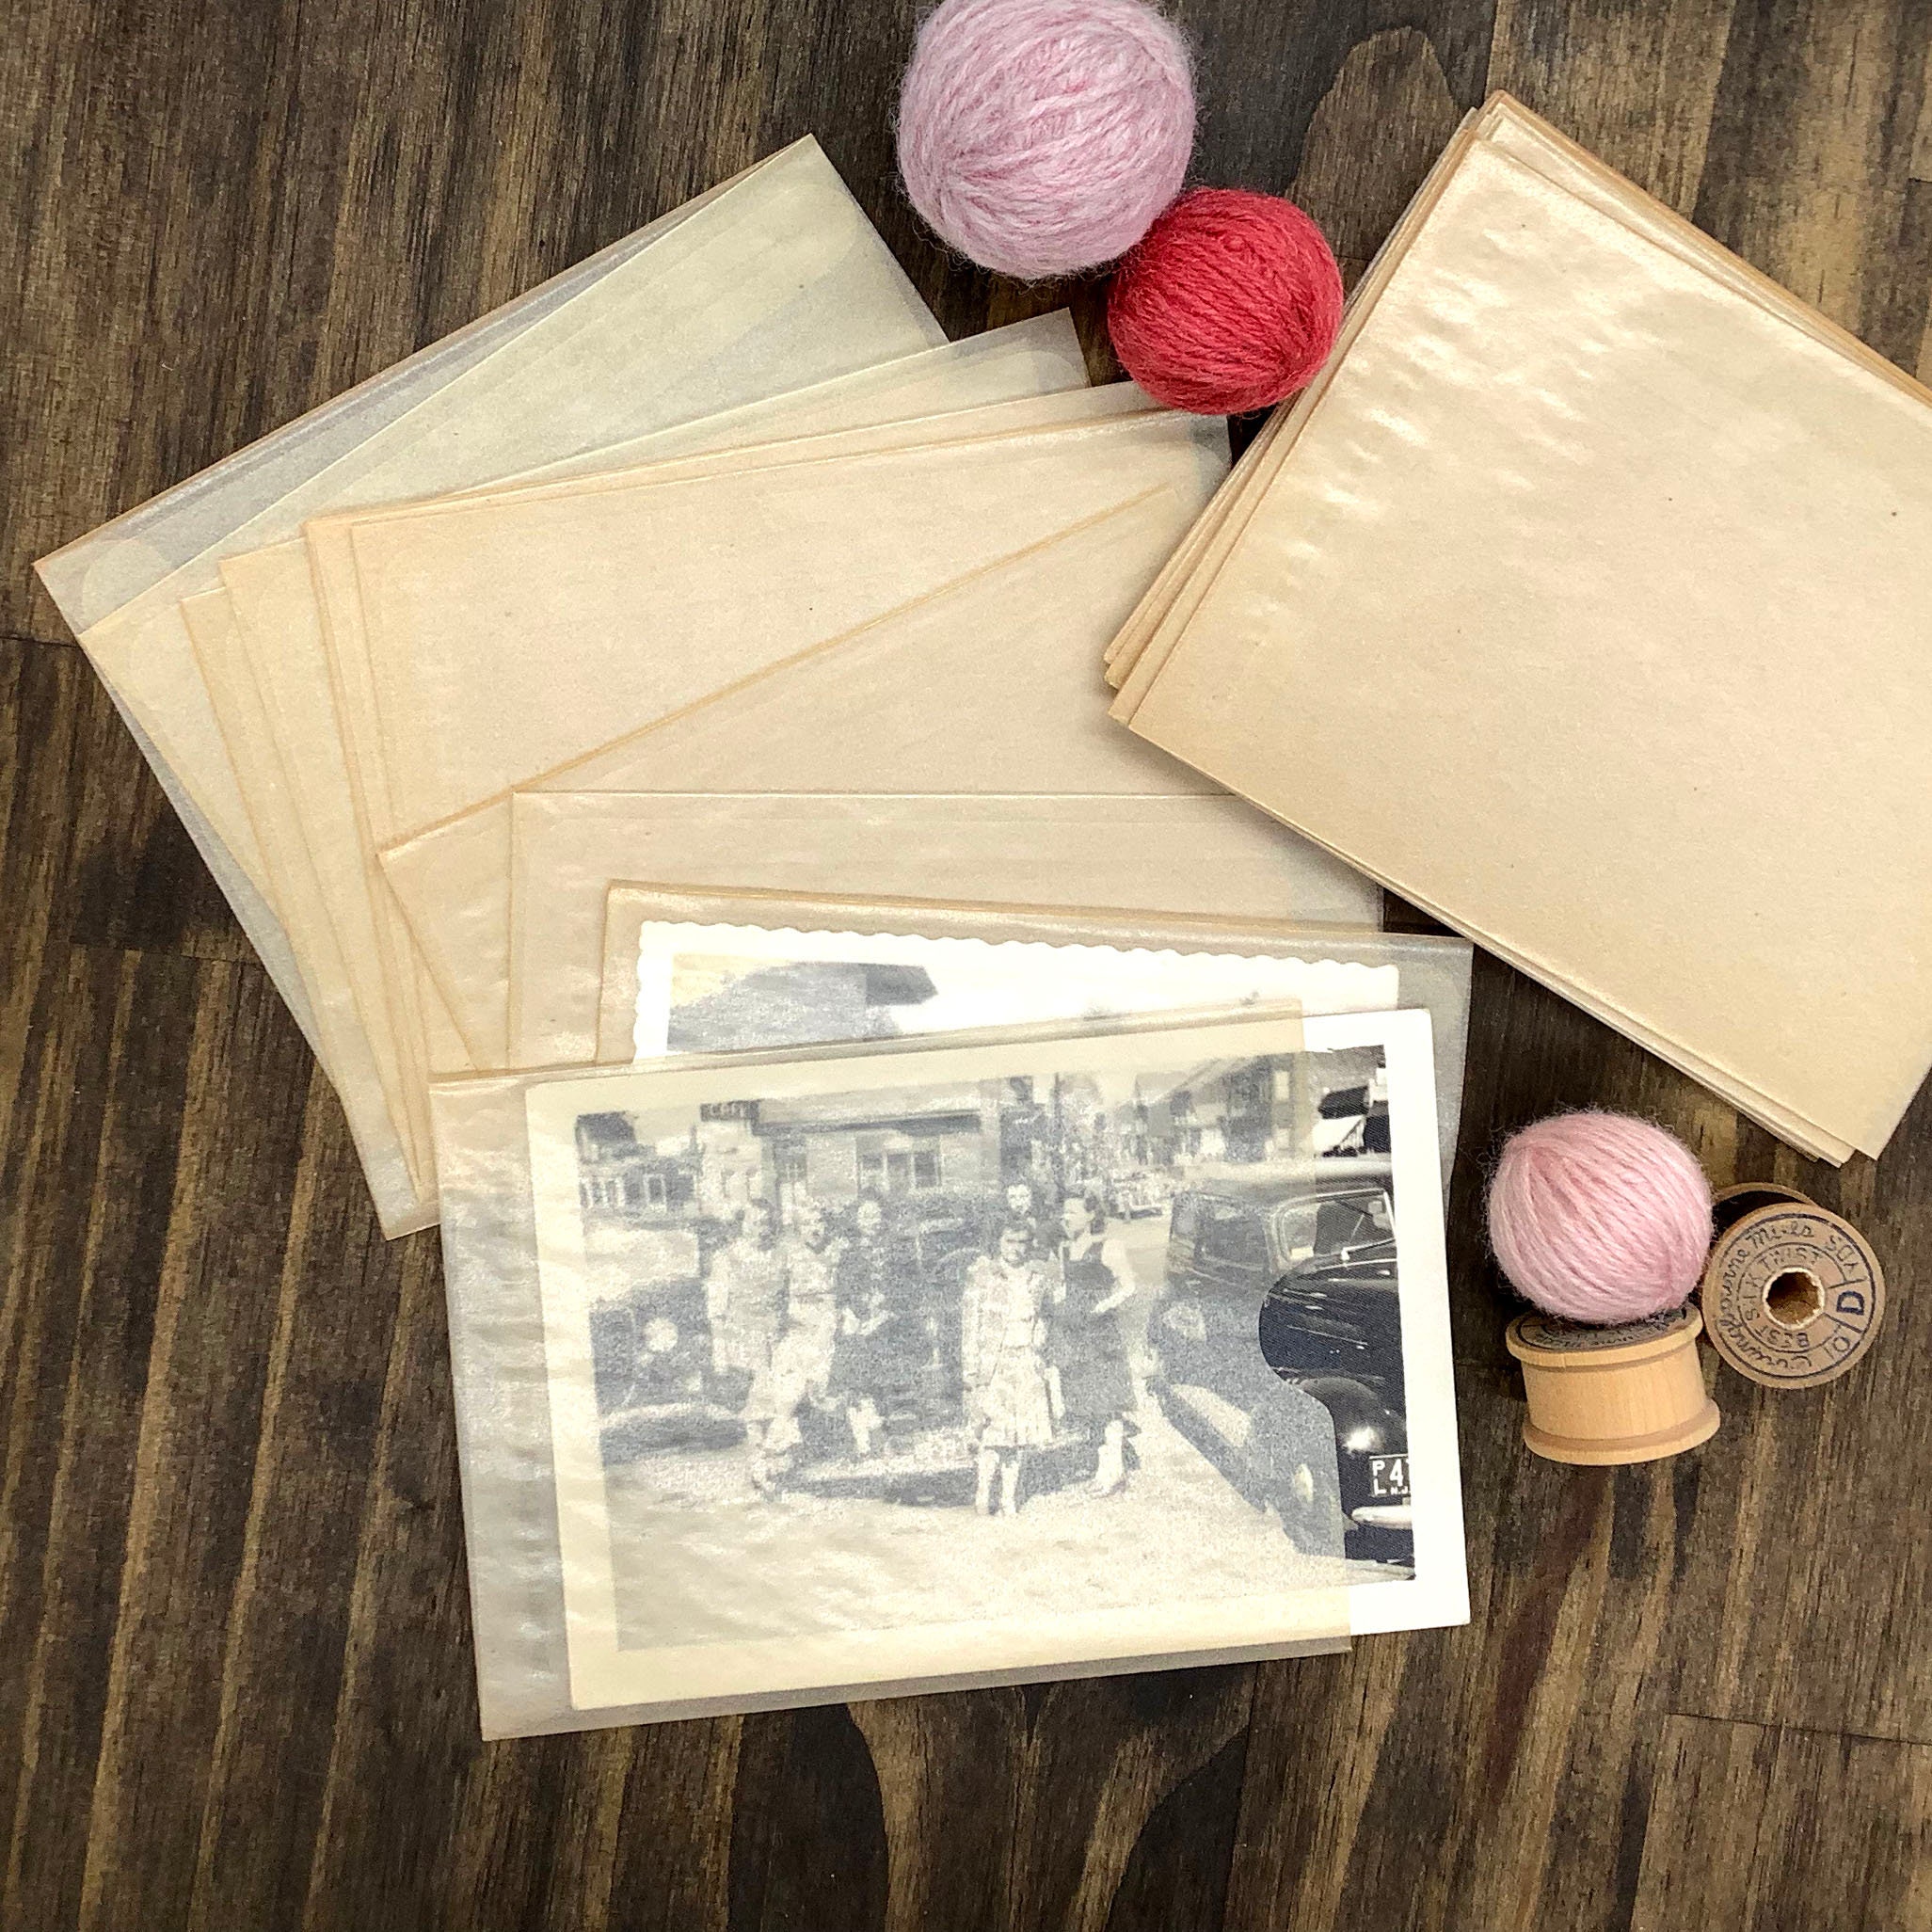 100 Glassine Envelopes 4x4 inches - Confetti, Sample, or Trinket Envelopes